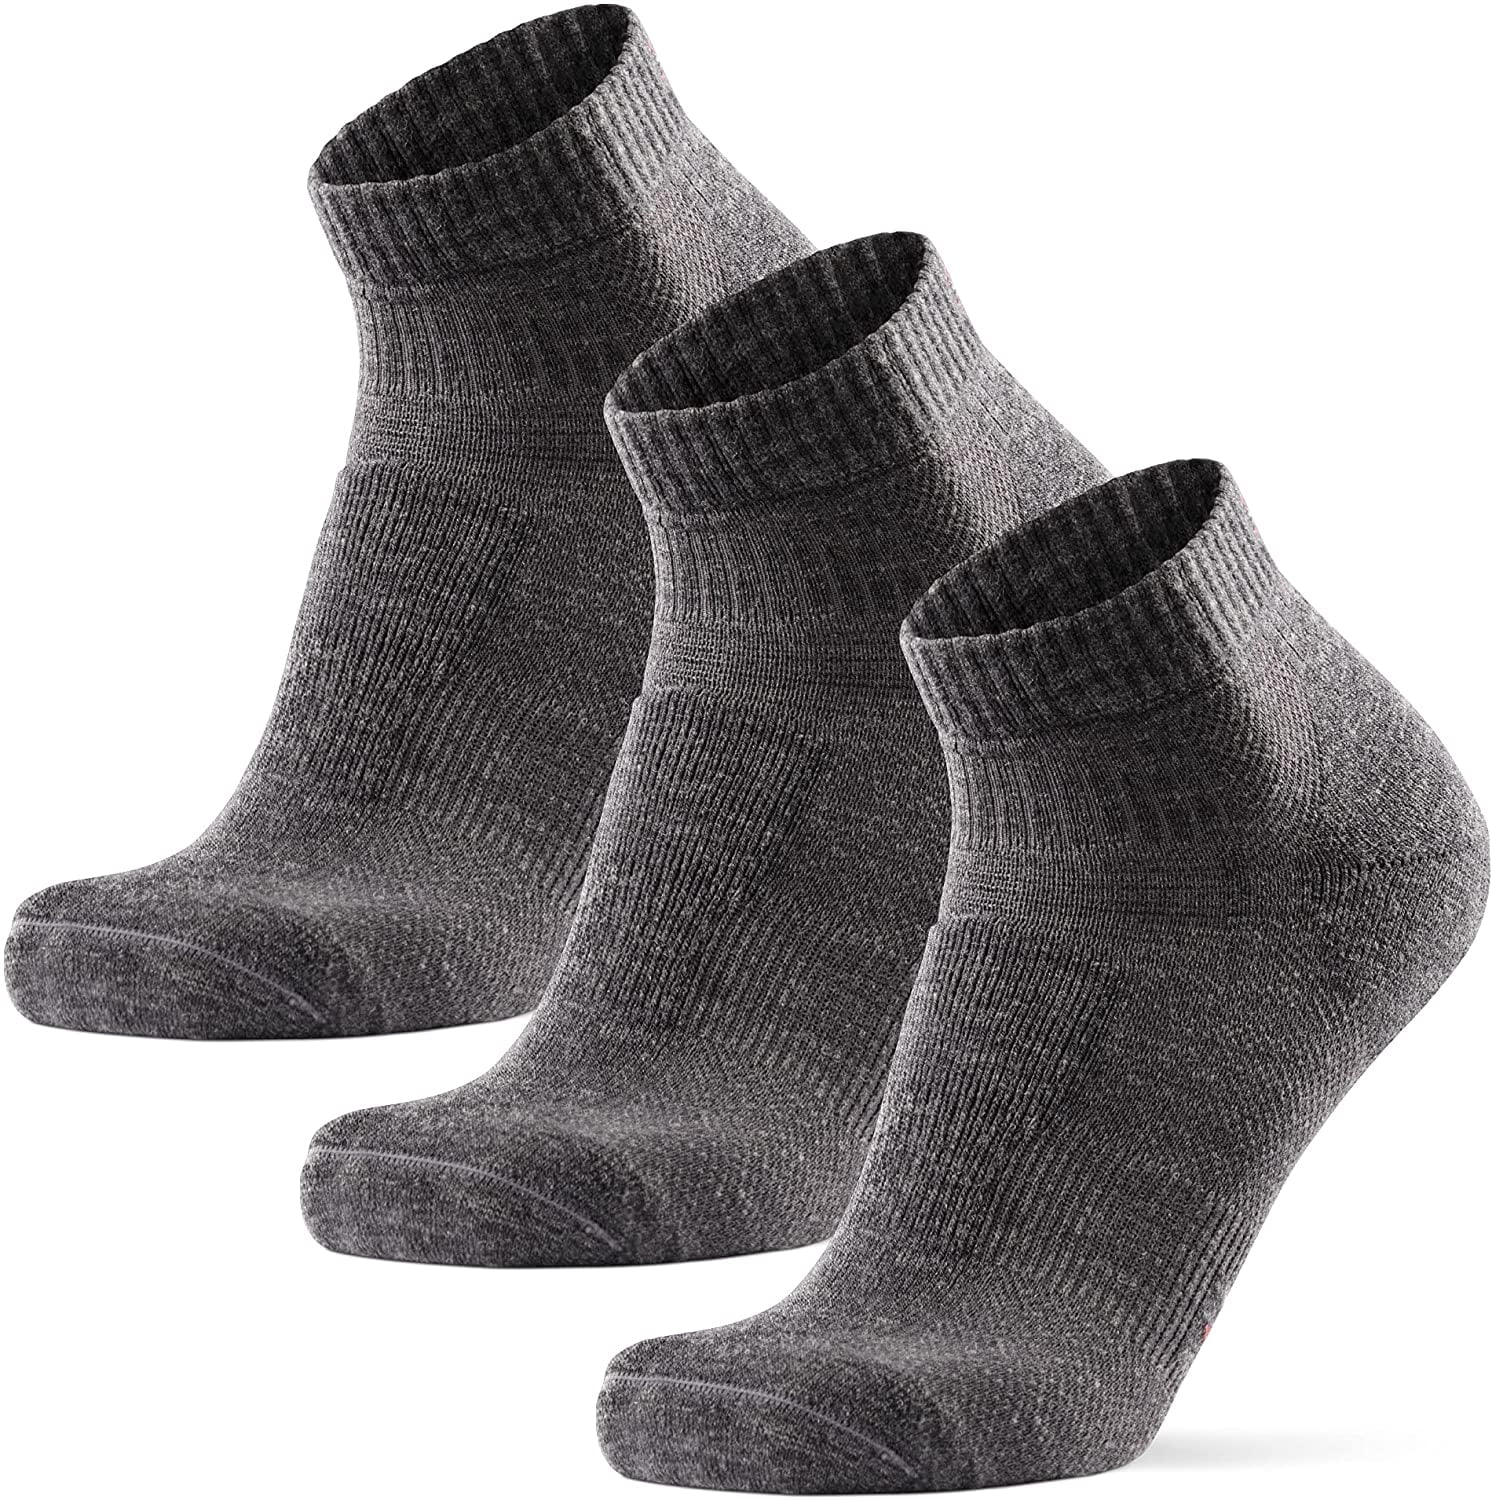 Lightweight Cushioned Trekking Outdoor DANISH ENDURANCE Merino Wool Low Cut Hiking Socks for Women & Men 3 Pack